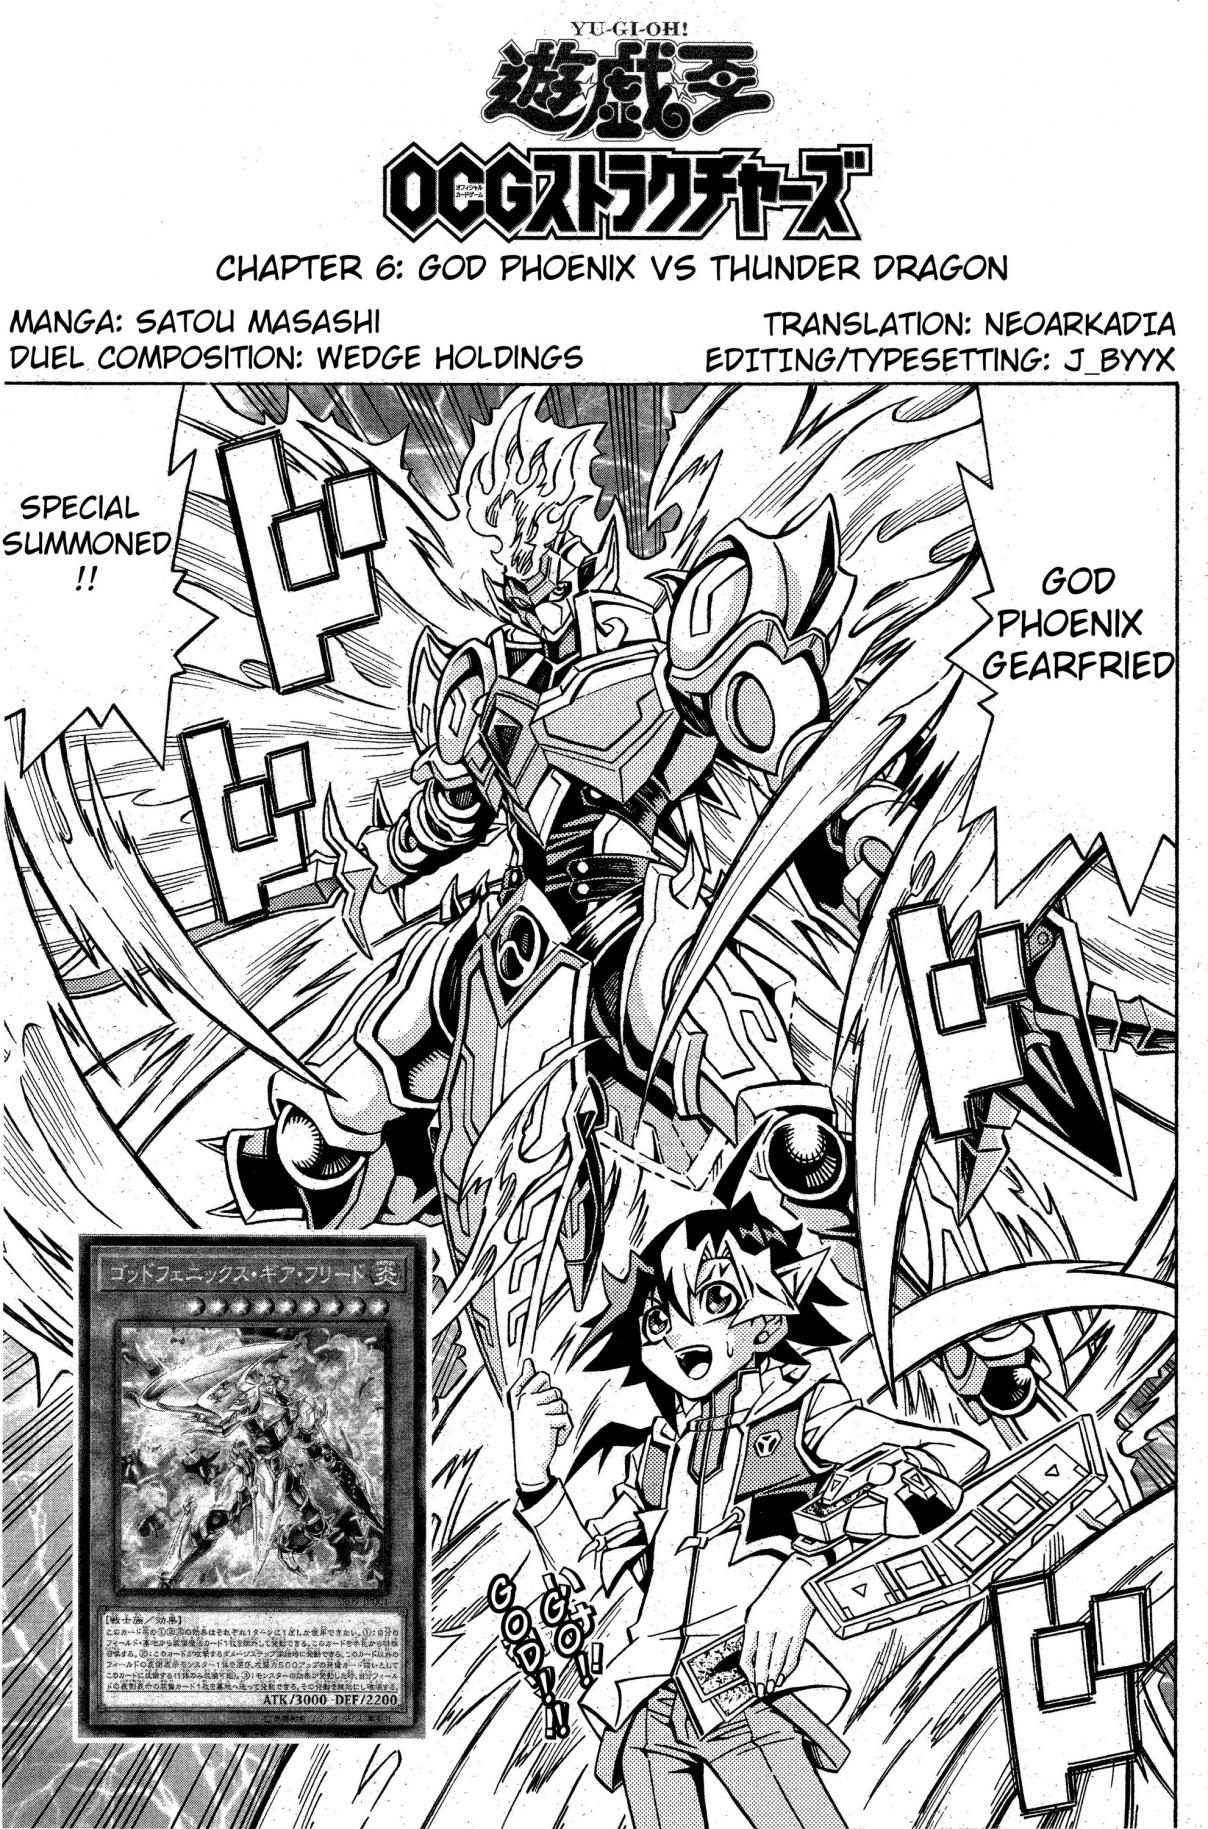 Yu Gi Oh! OCG Structures Ch. 6 God Phoenix vs. Thunder Dragon